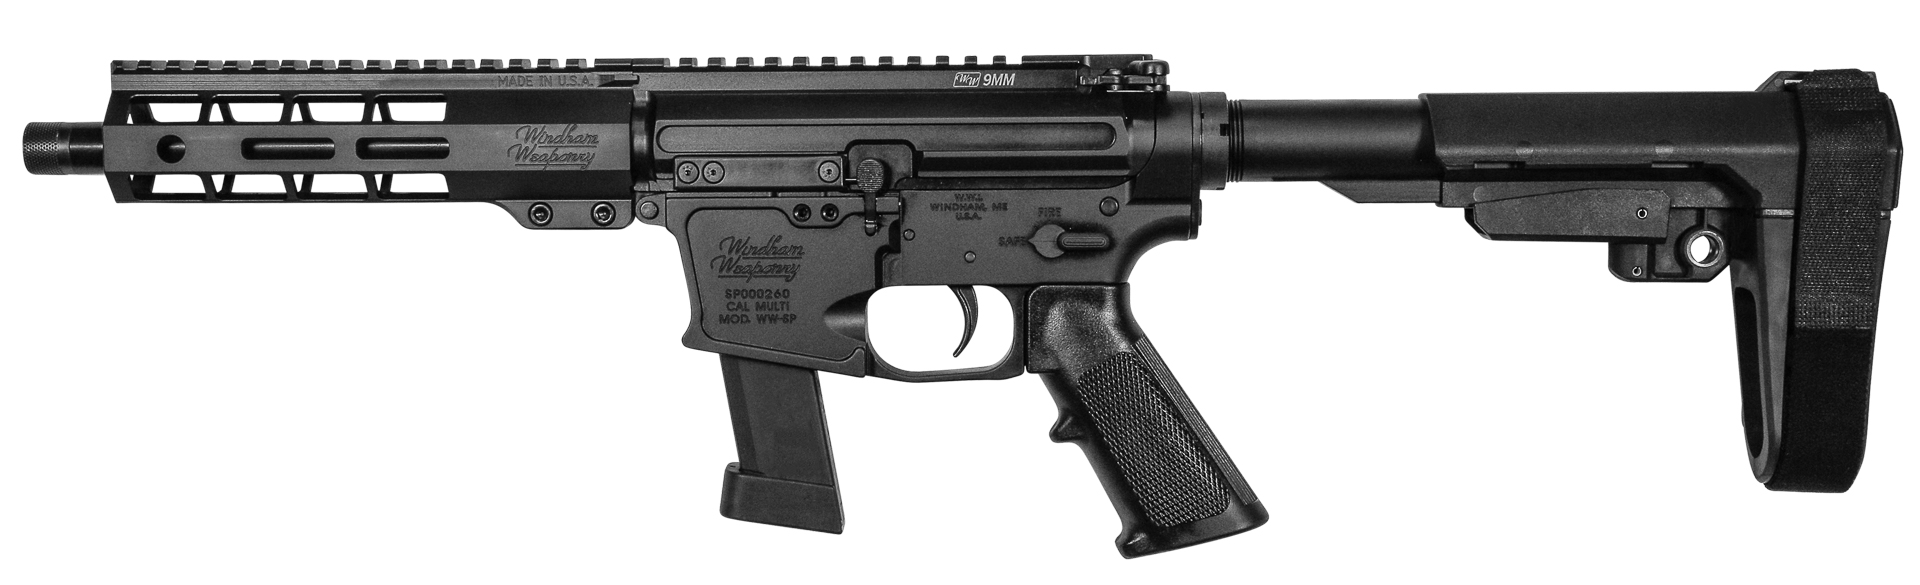 Windham 9mm Pistol